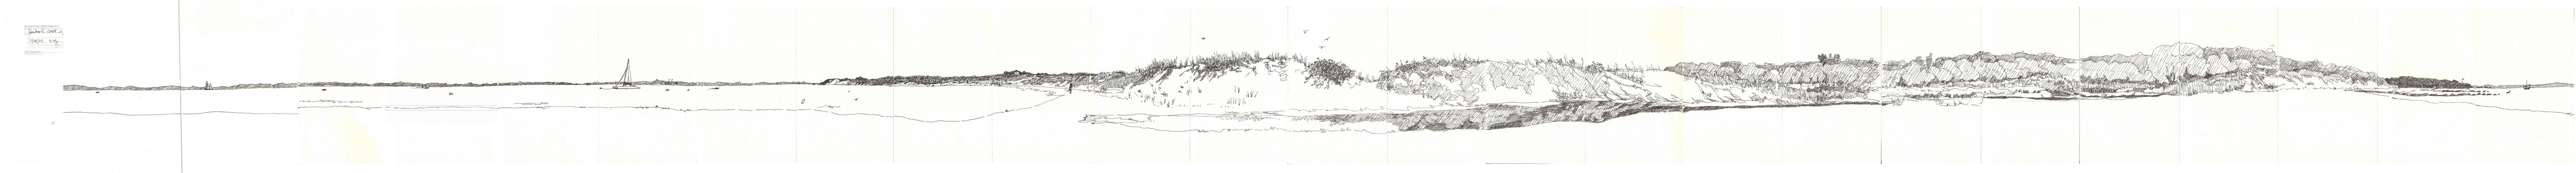 Lambert's Cove Pond 7.26.22 by Marthe Rowen